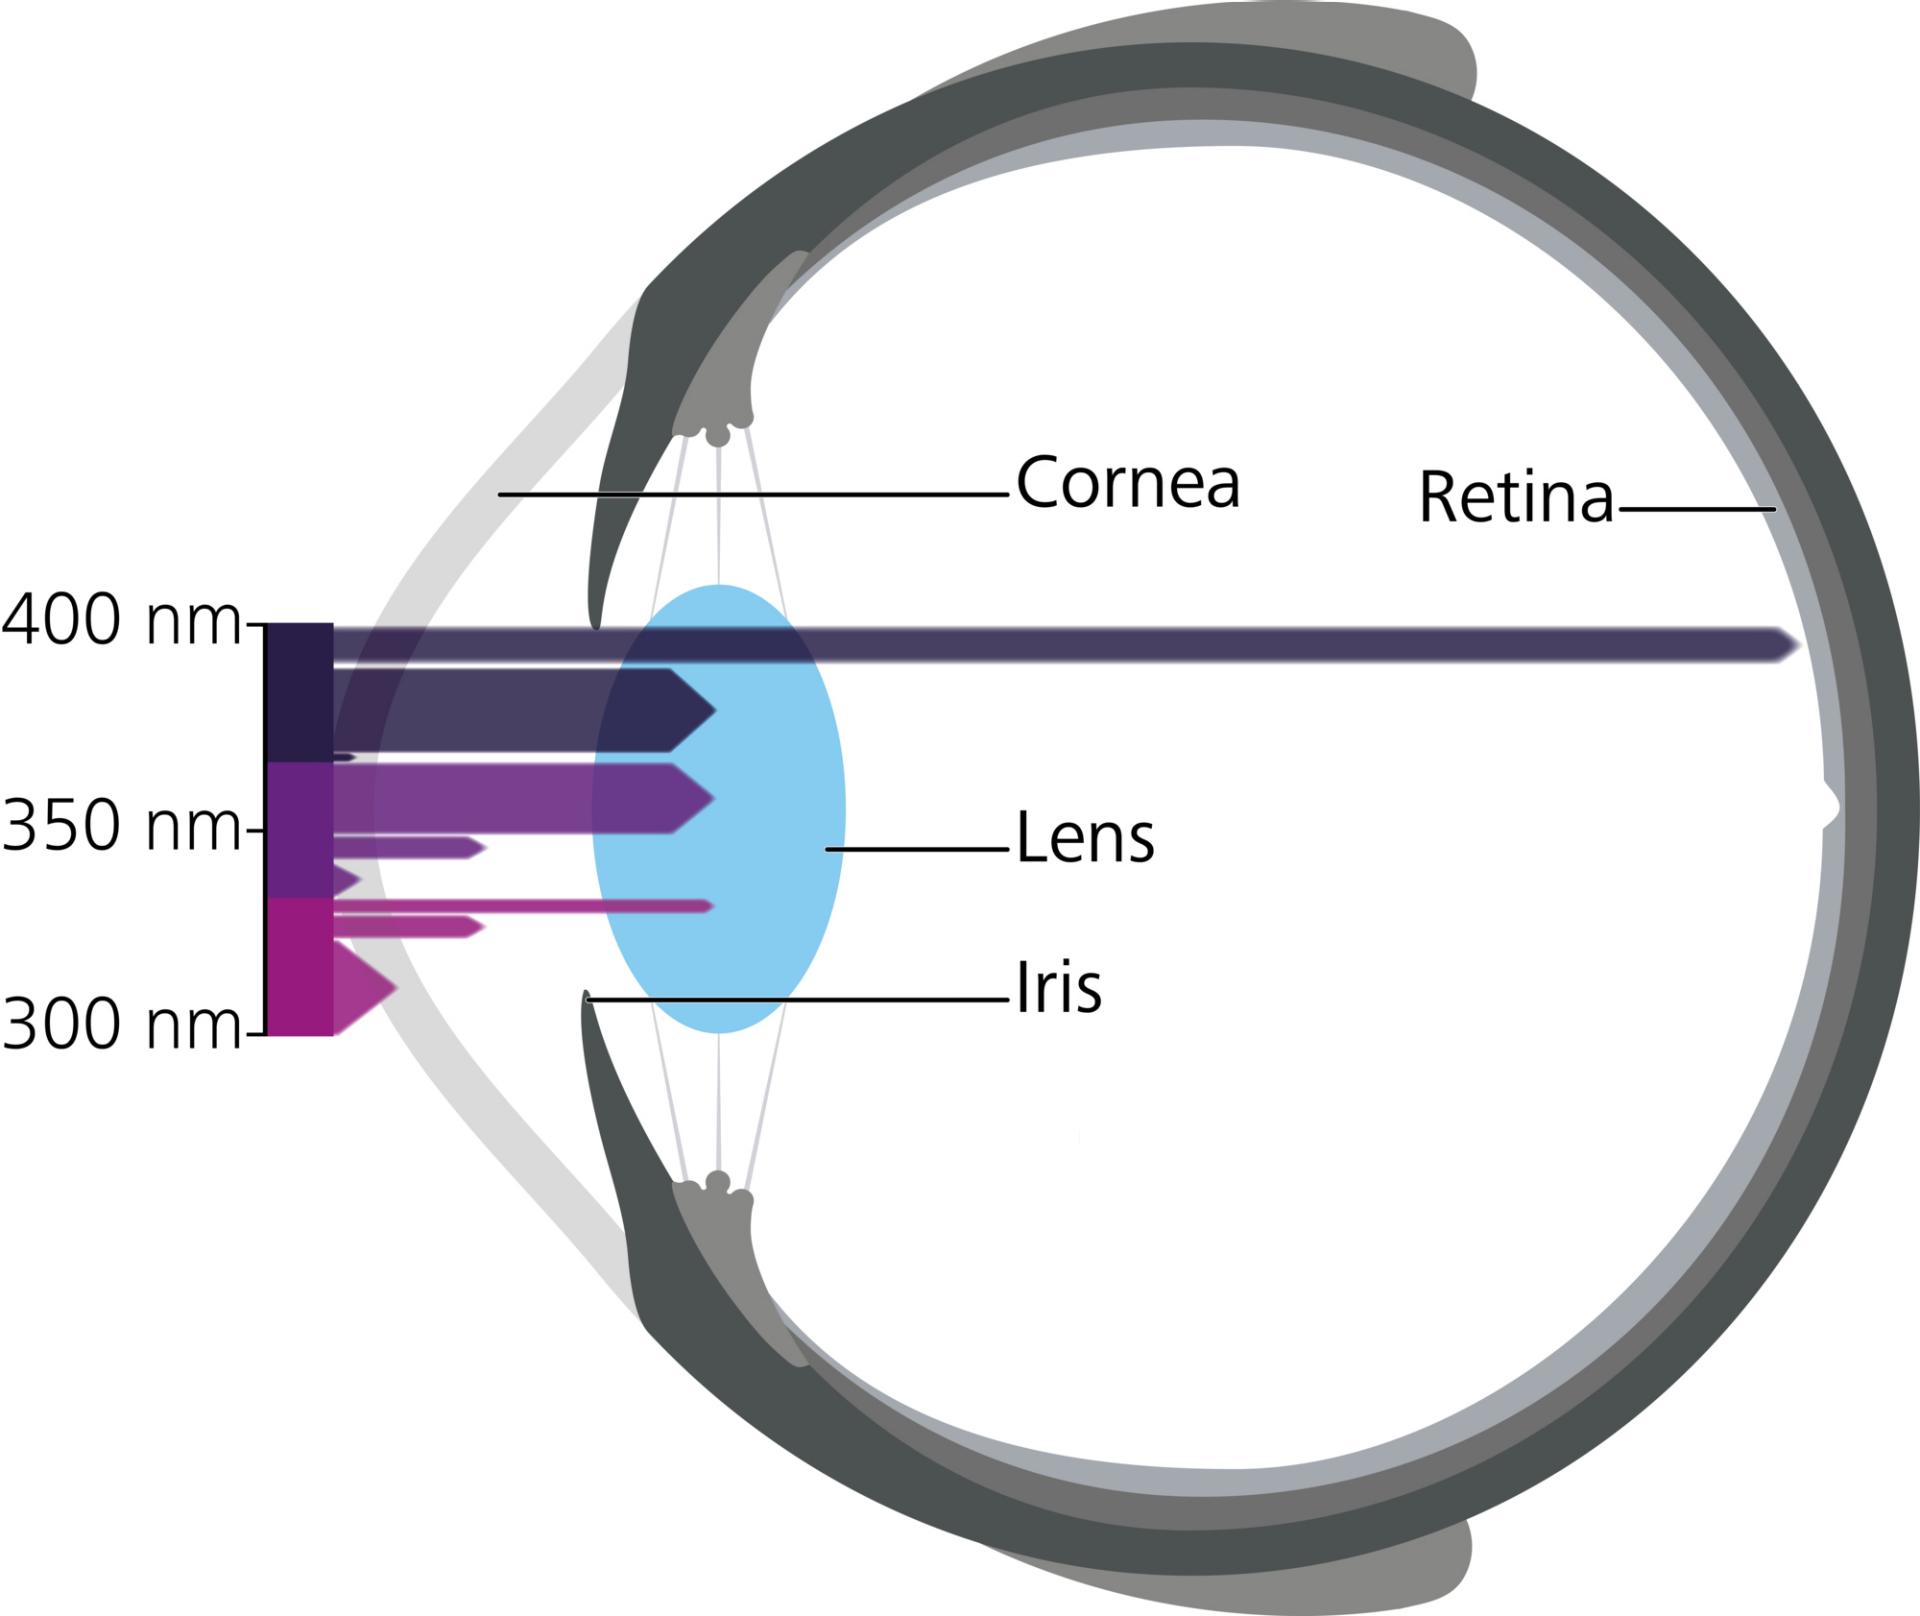 Diagram of the penetration depth in the eye based on different UVR wavelengths